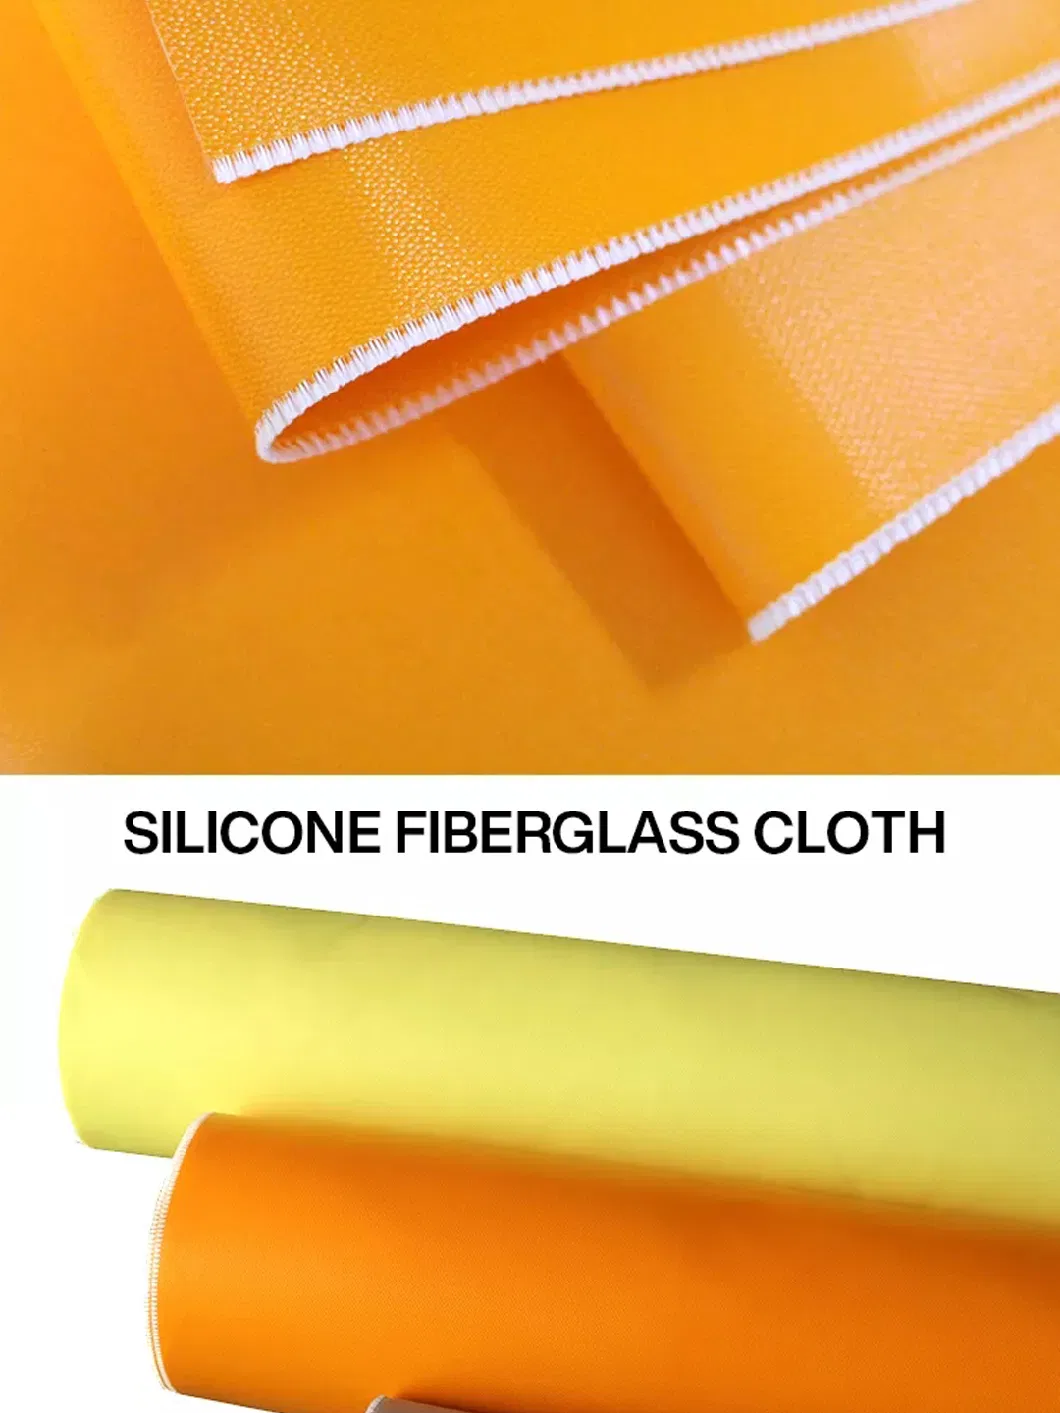 Hotel Hospital Safety Fireproof Smoke Curtain Silicone-Coated Fiberglass Cloth